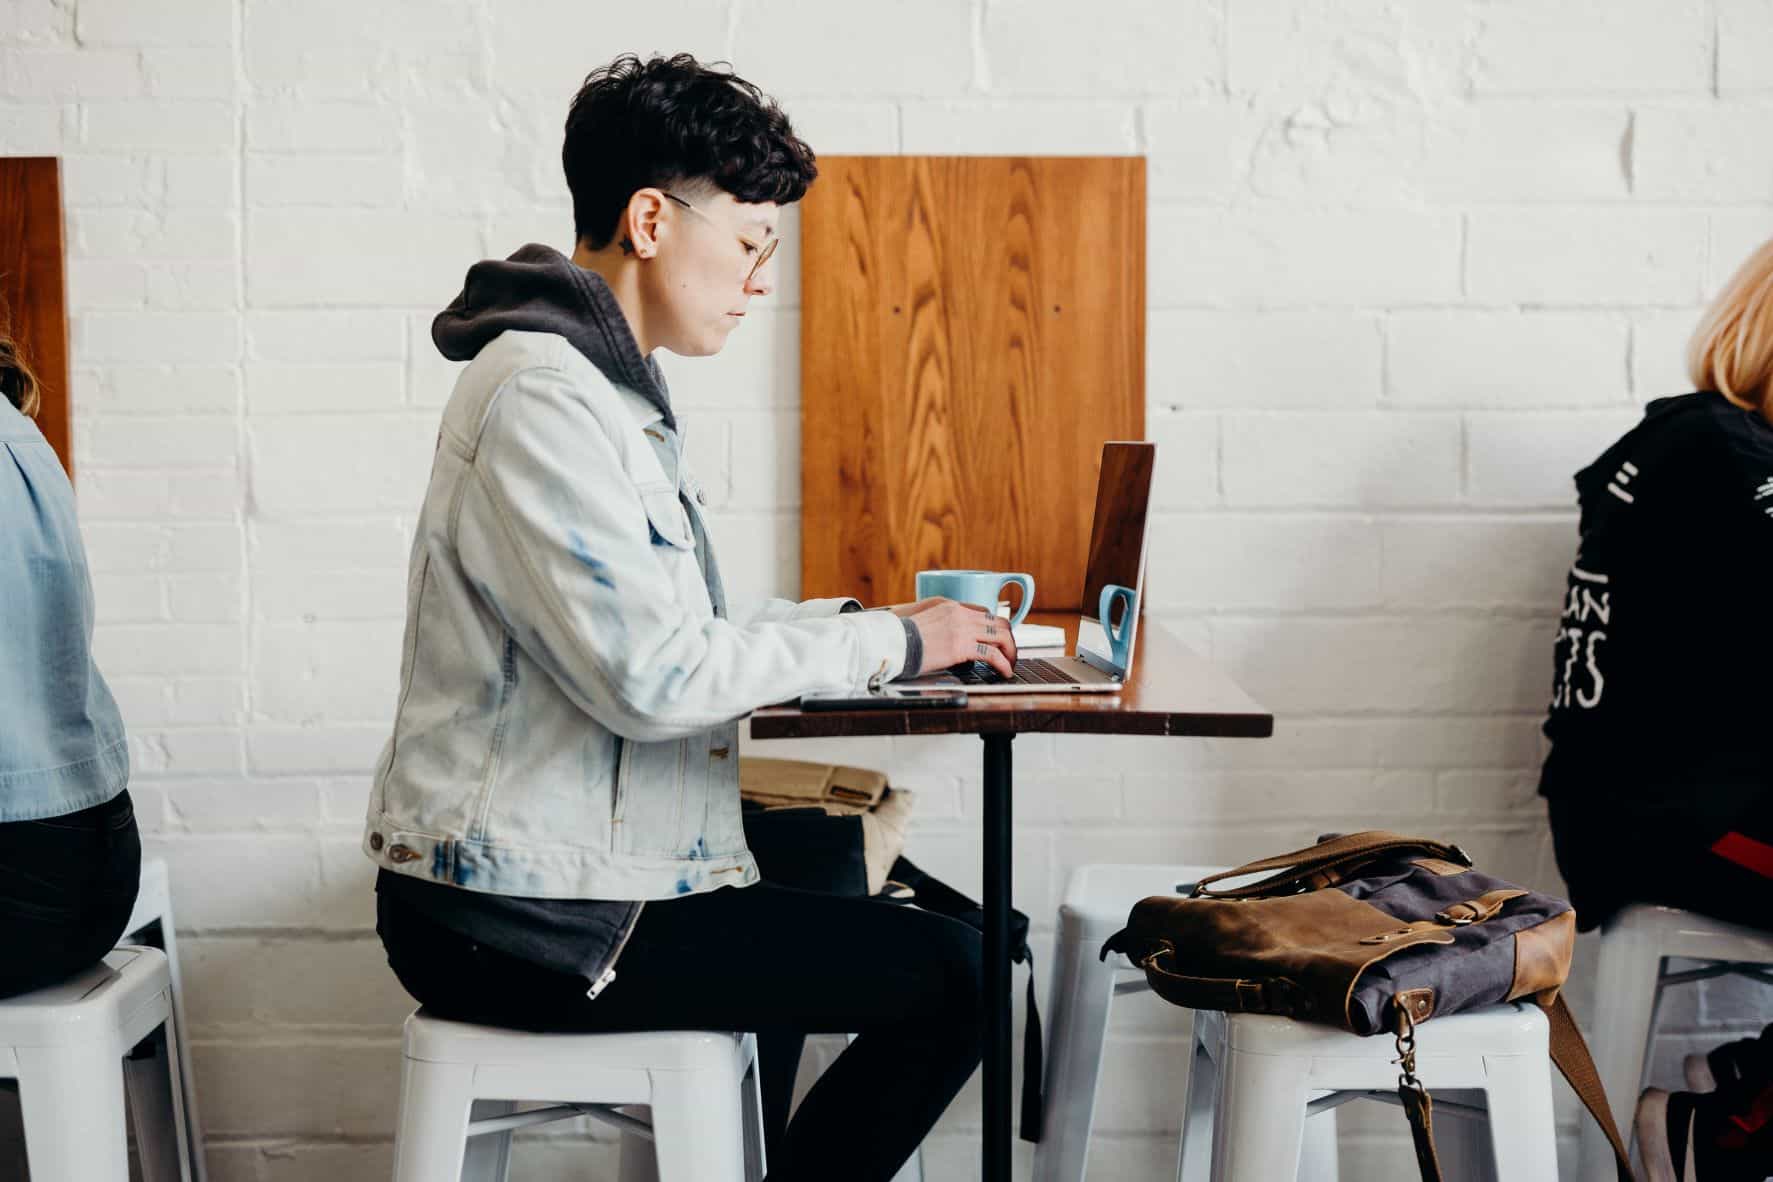 Student using laptop